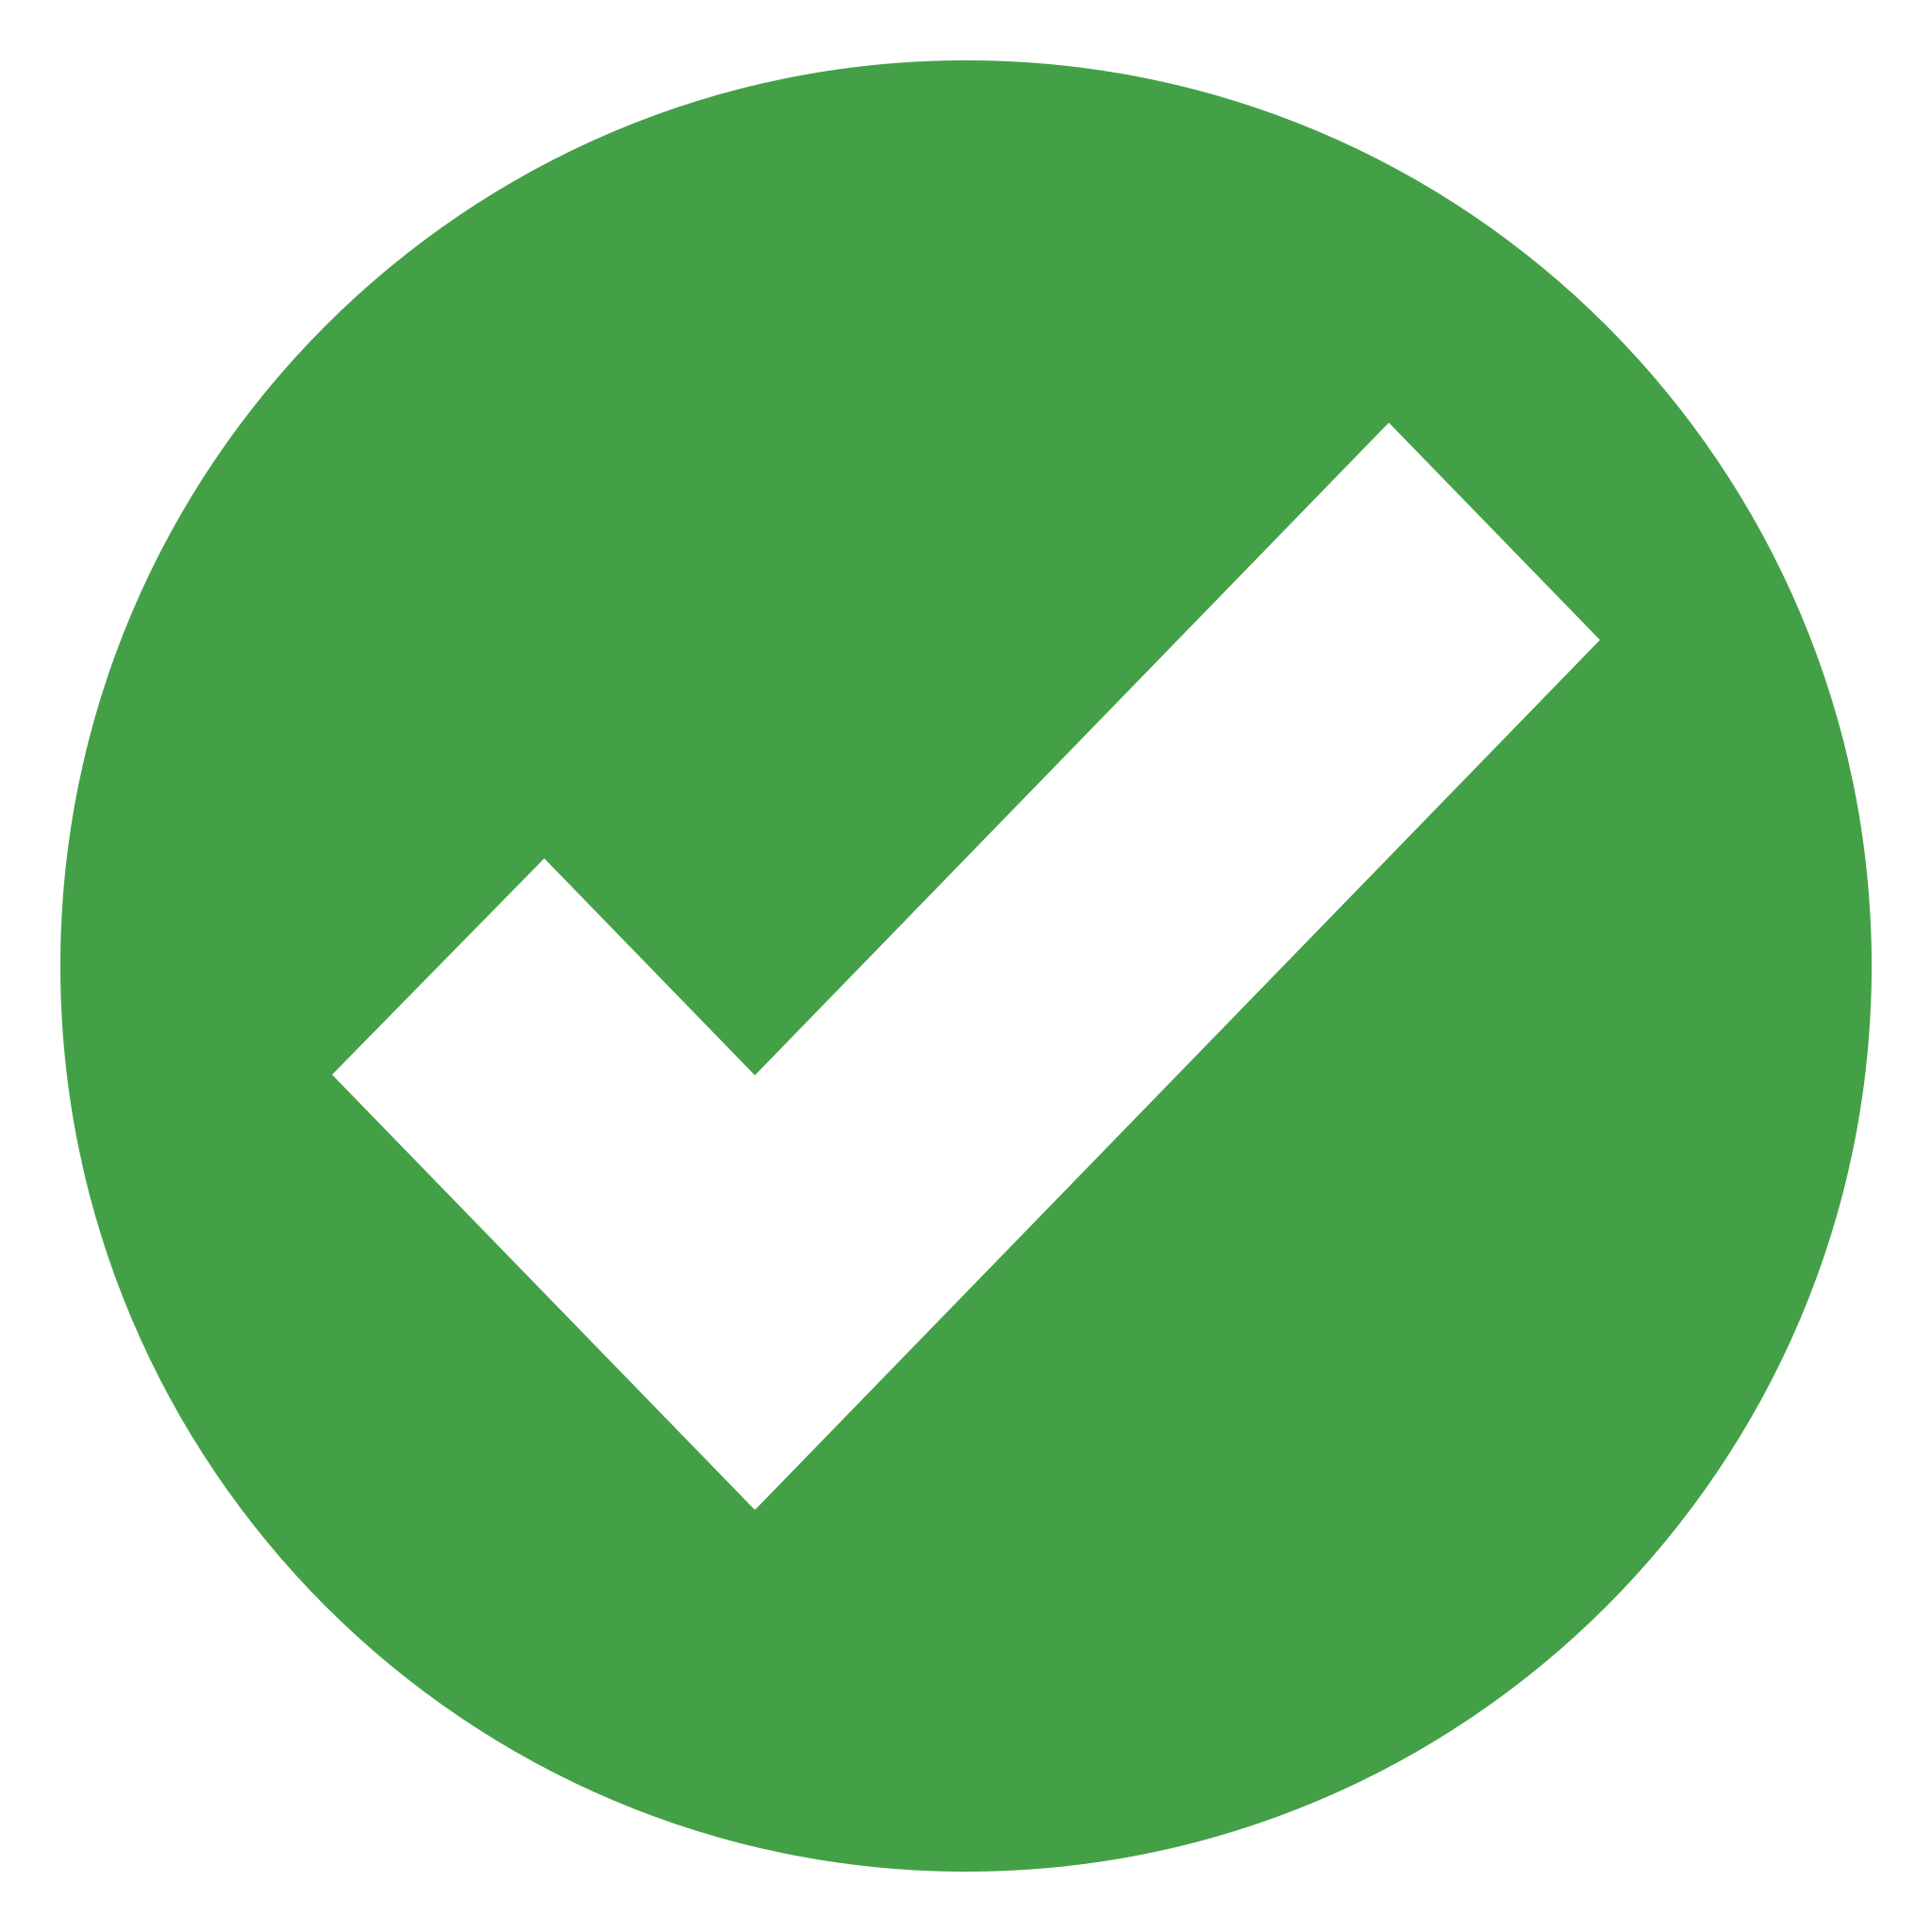 Checkmark or green signal icon